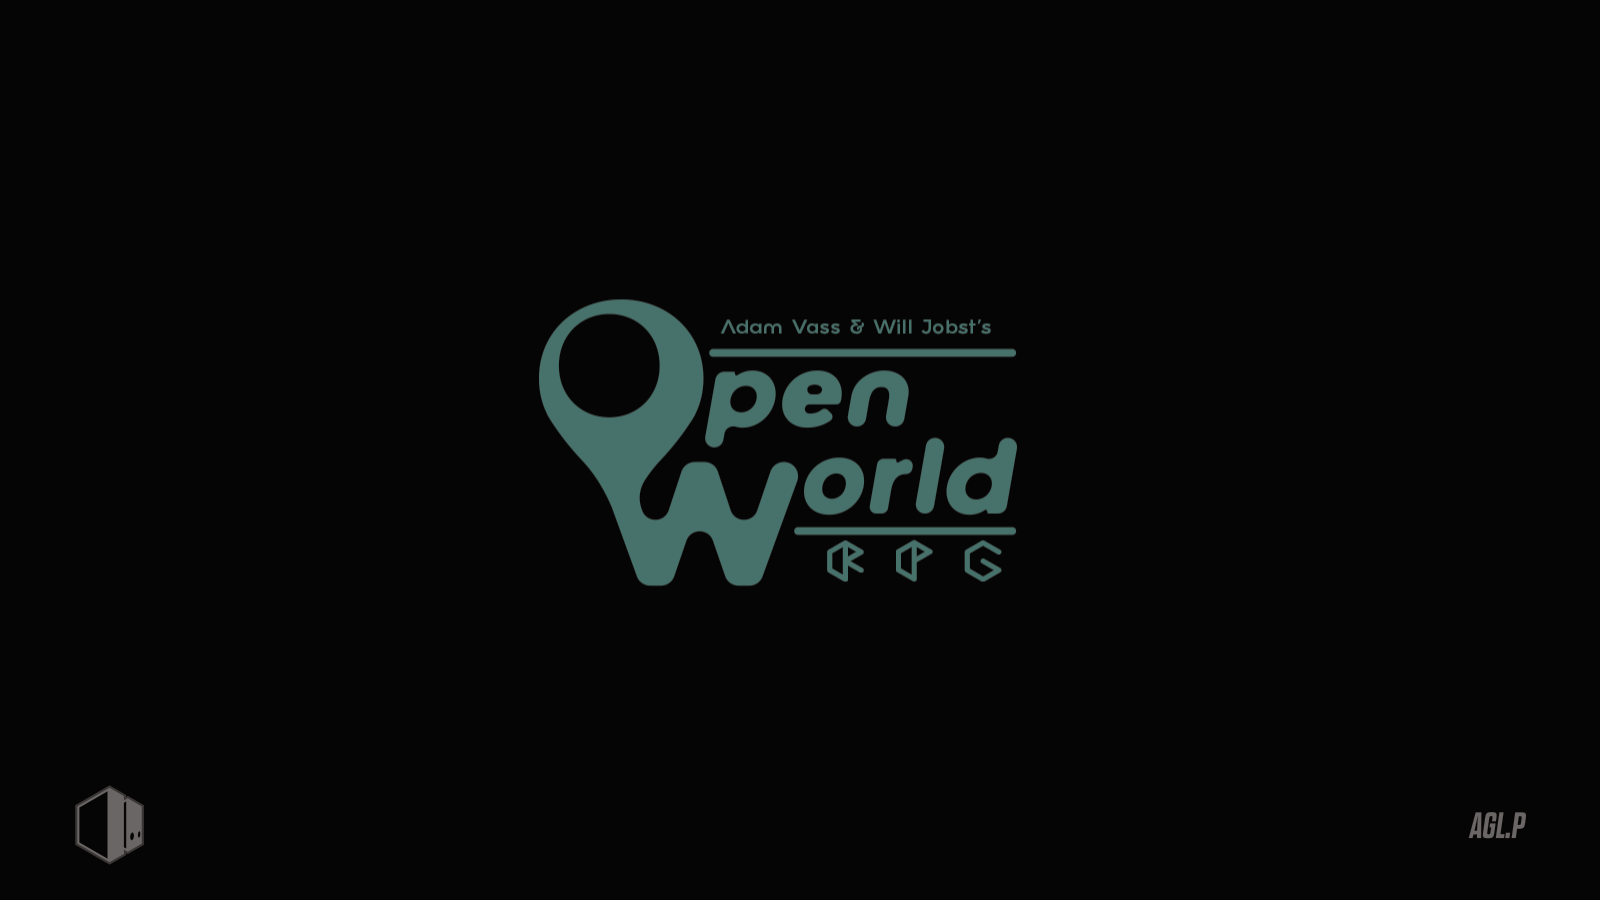 Open World RPG | World Champ Game Co. | Adam Vass